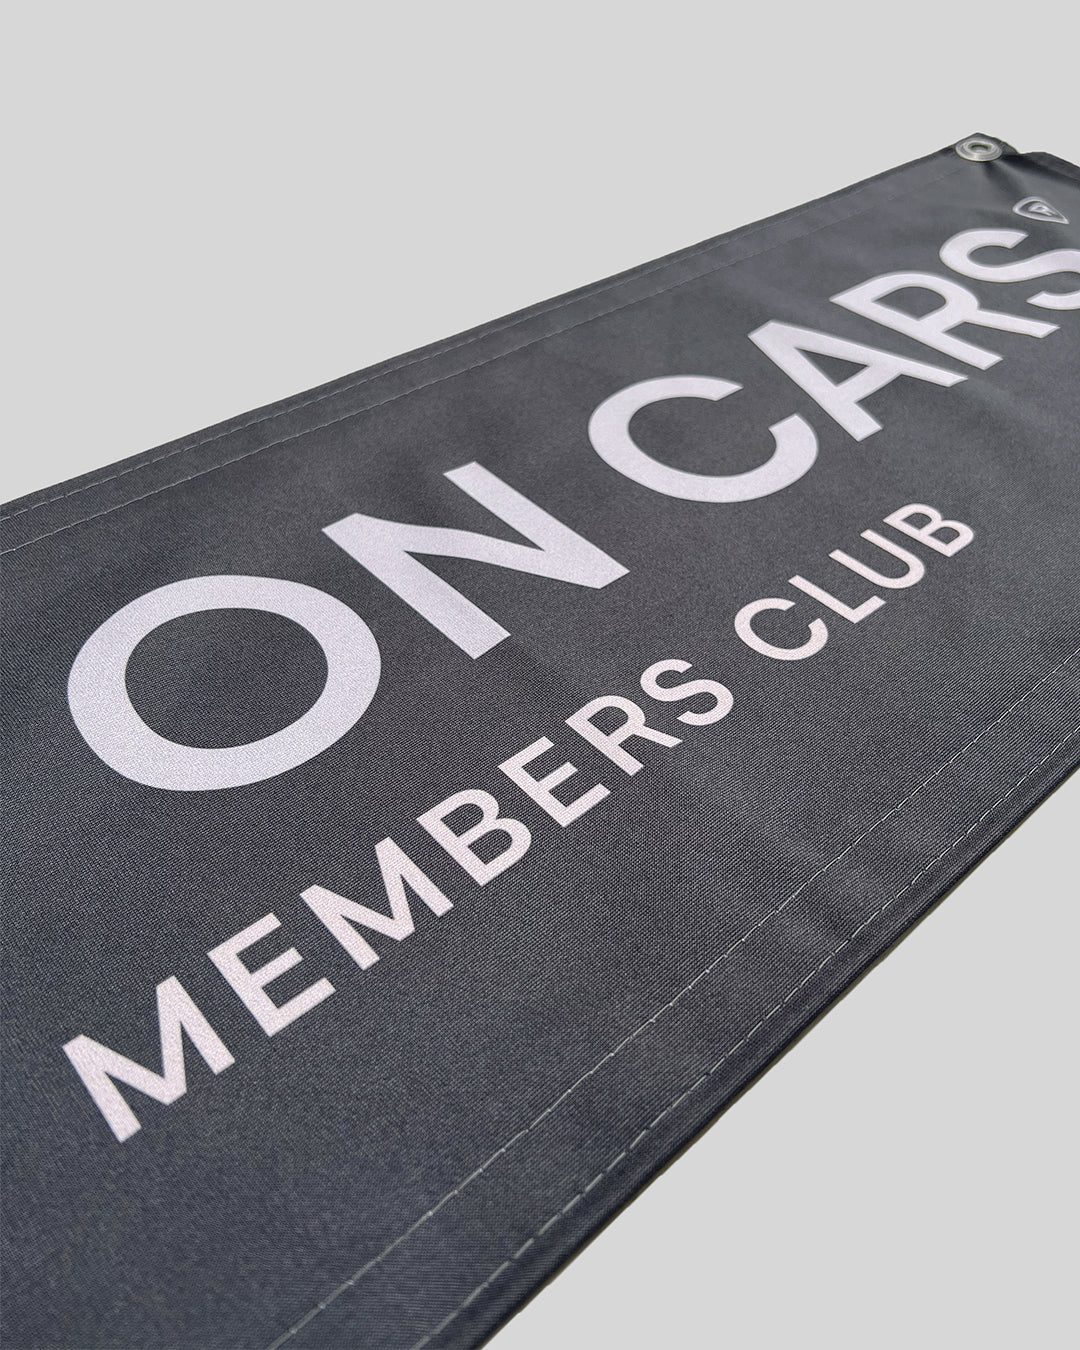 Banner - Members Club